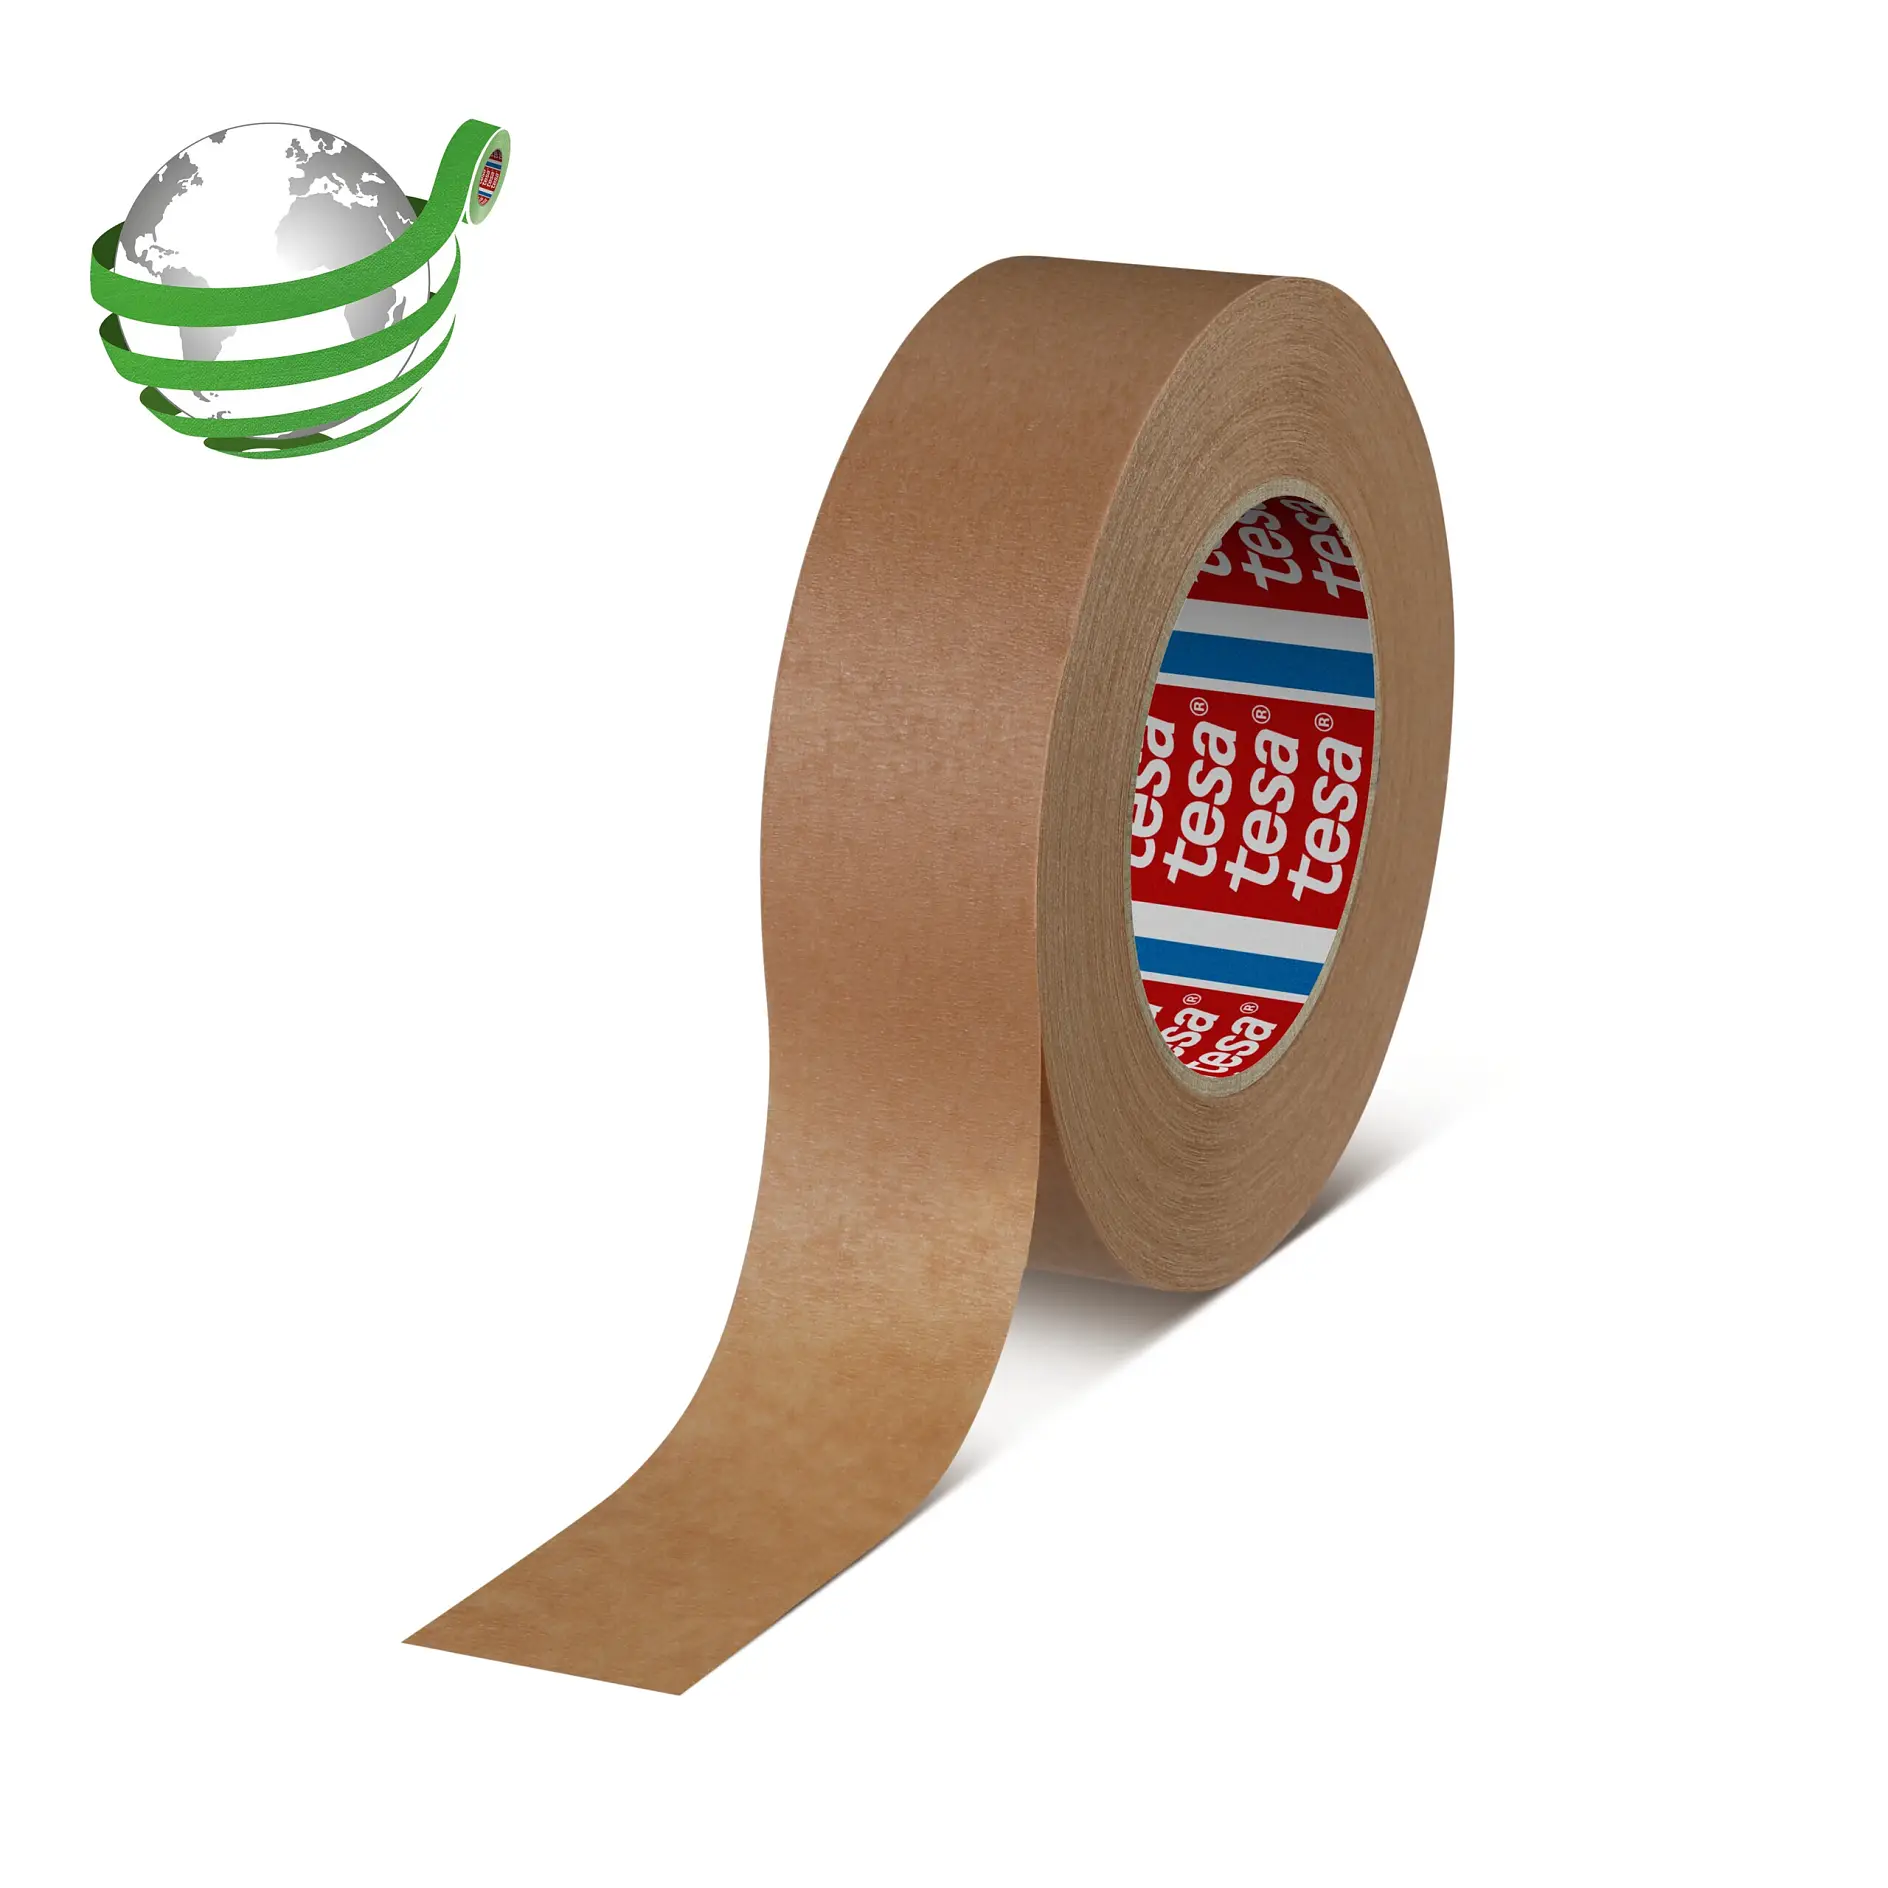 tesa-4341-high-temperature-masking-tape-brown-043410000500-pr-with-marker